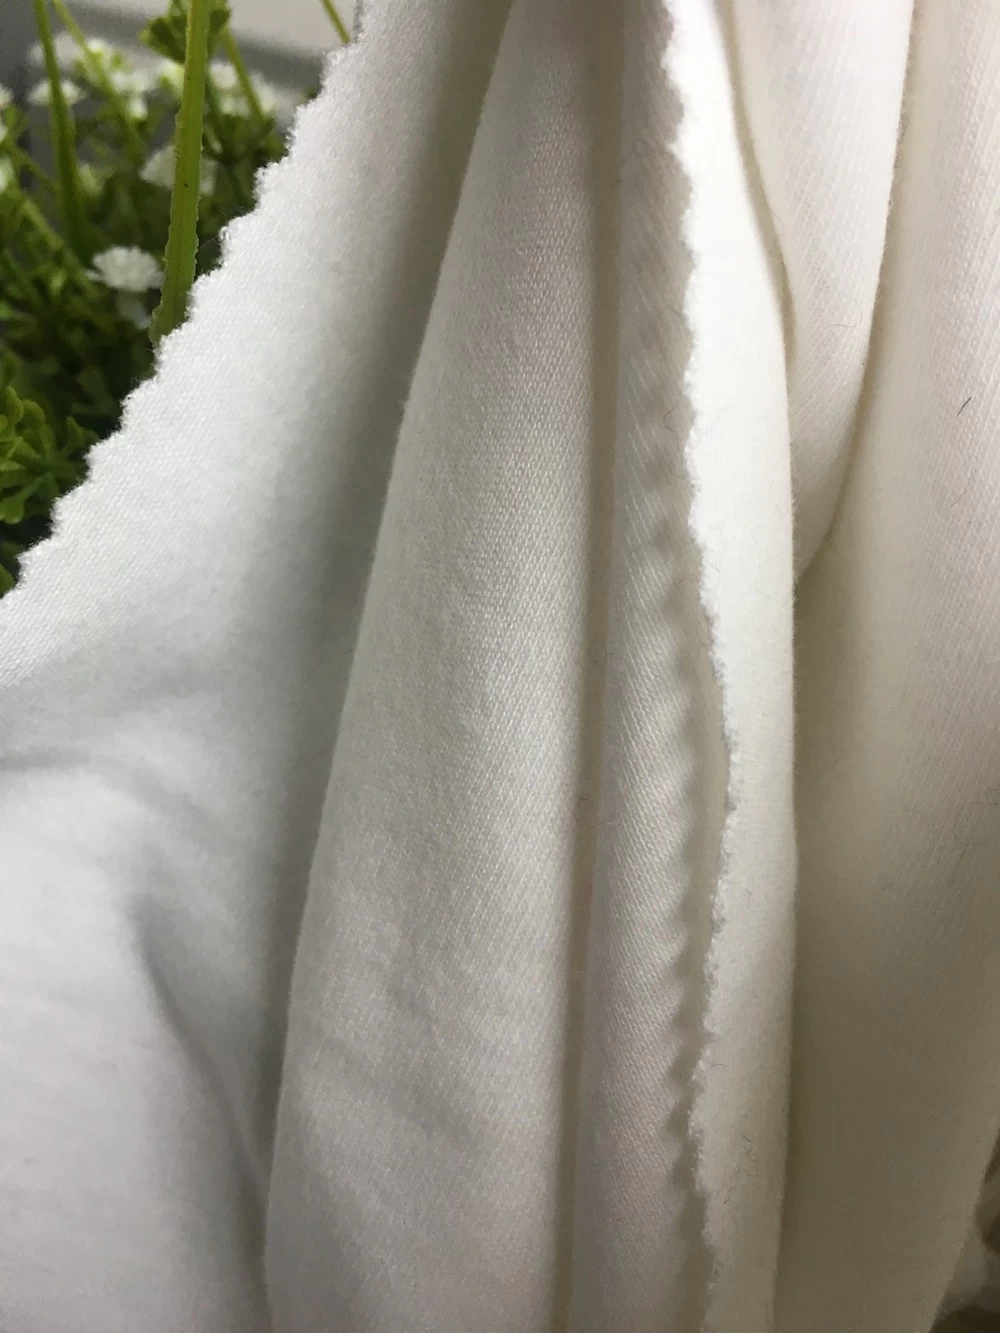 T/C  mattress cover fabric